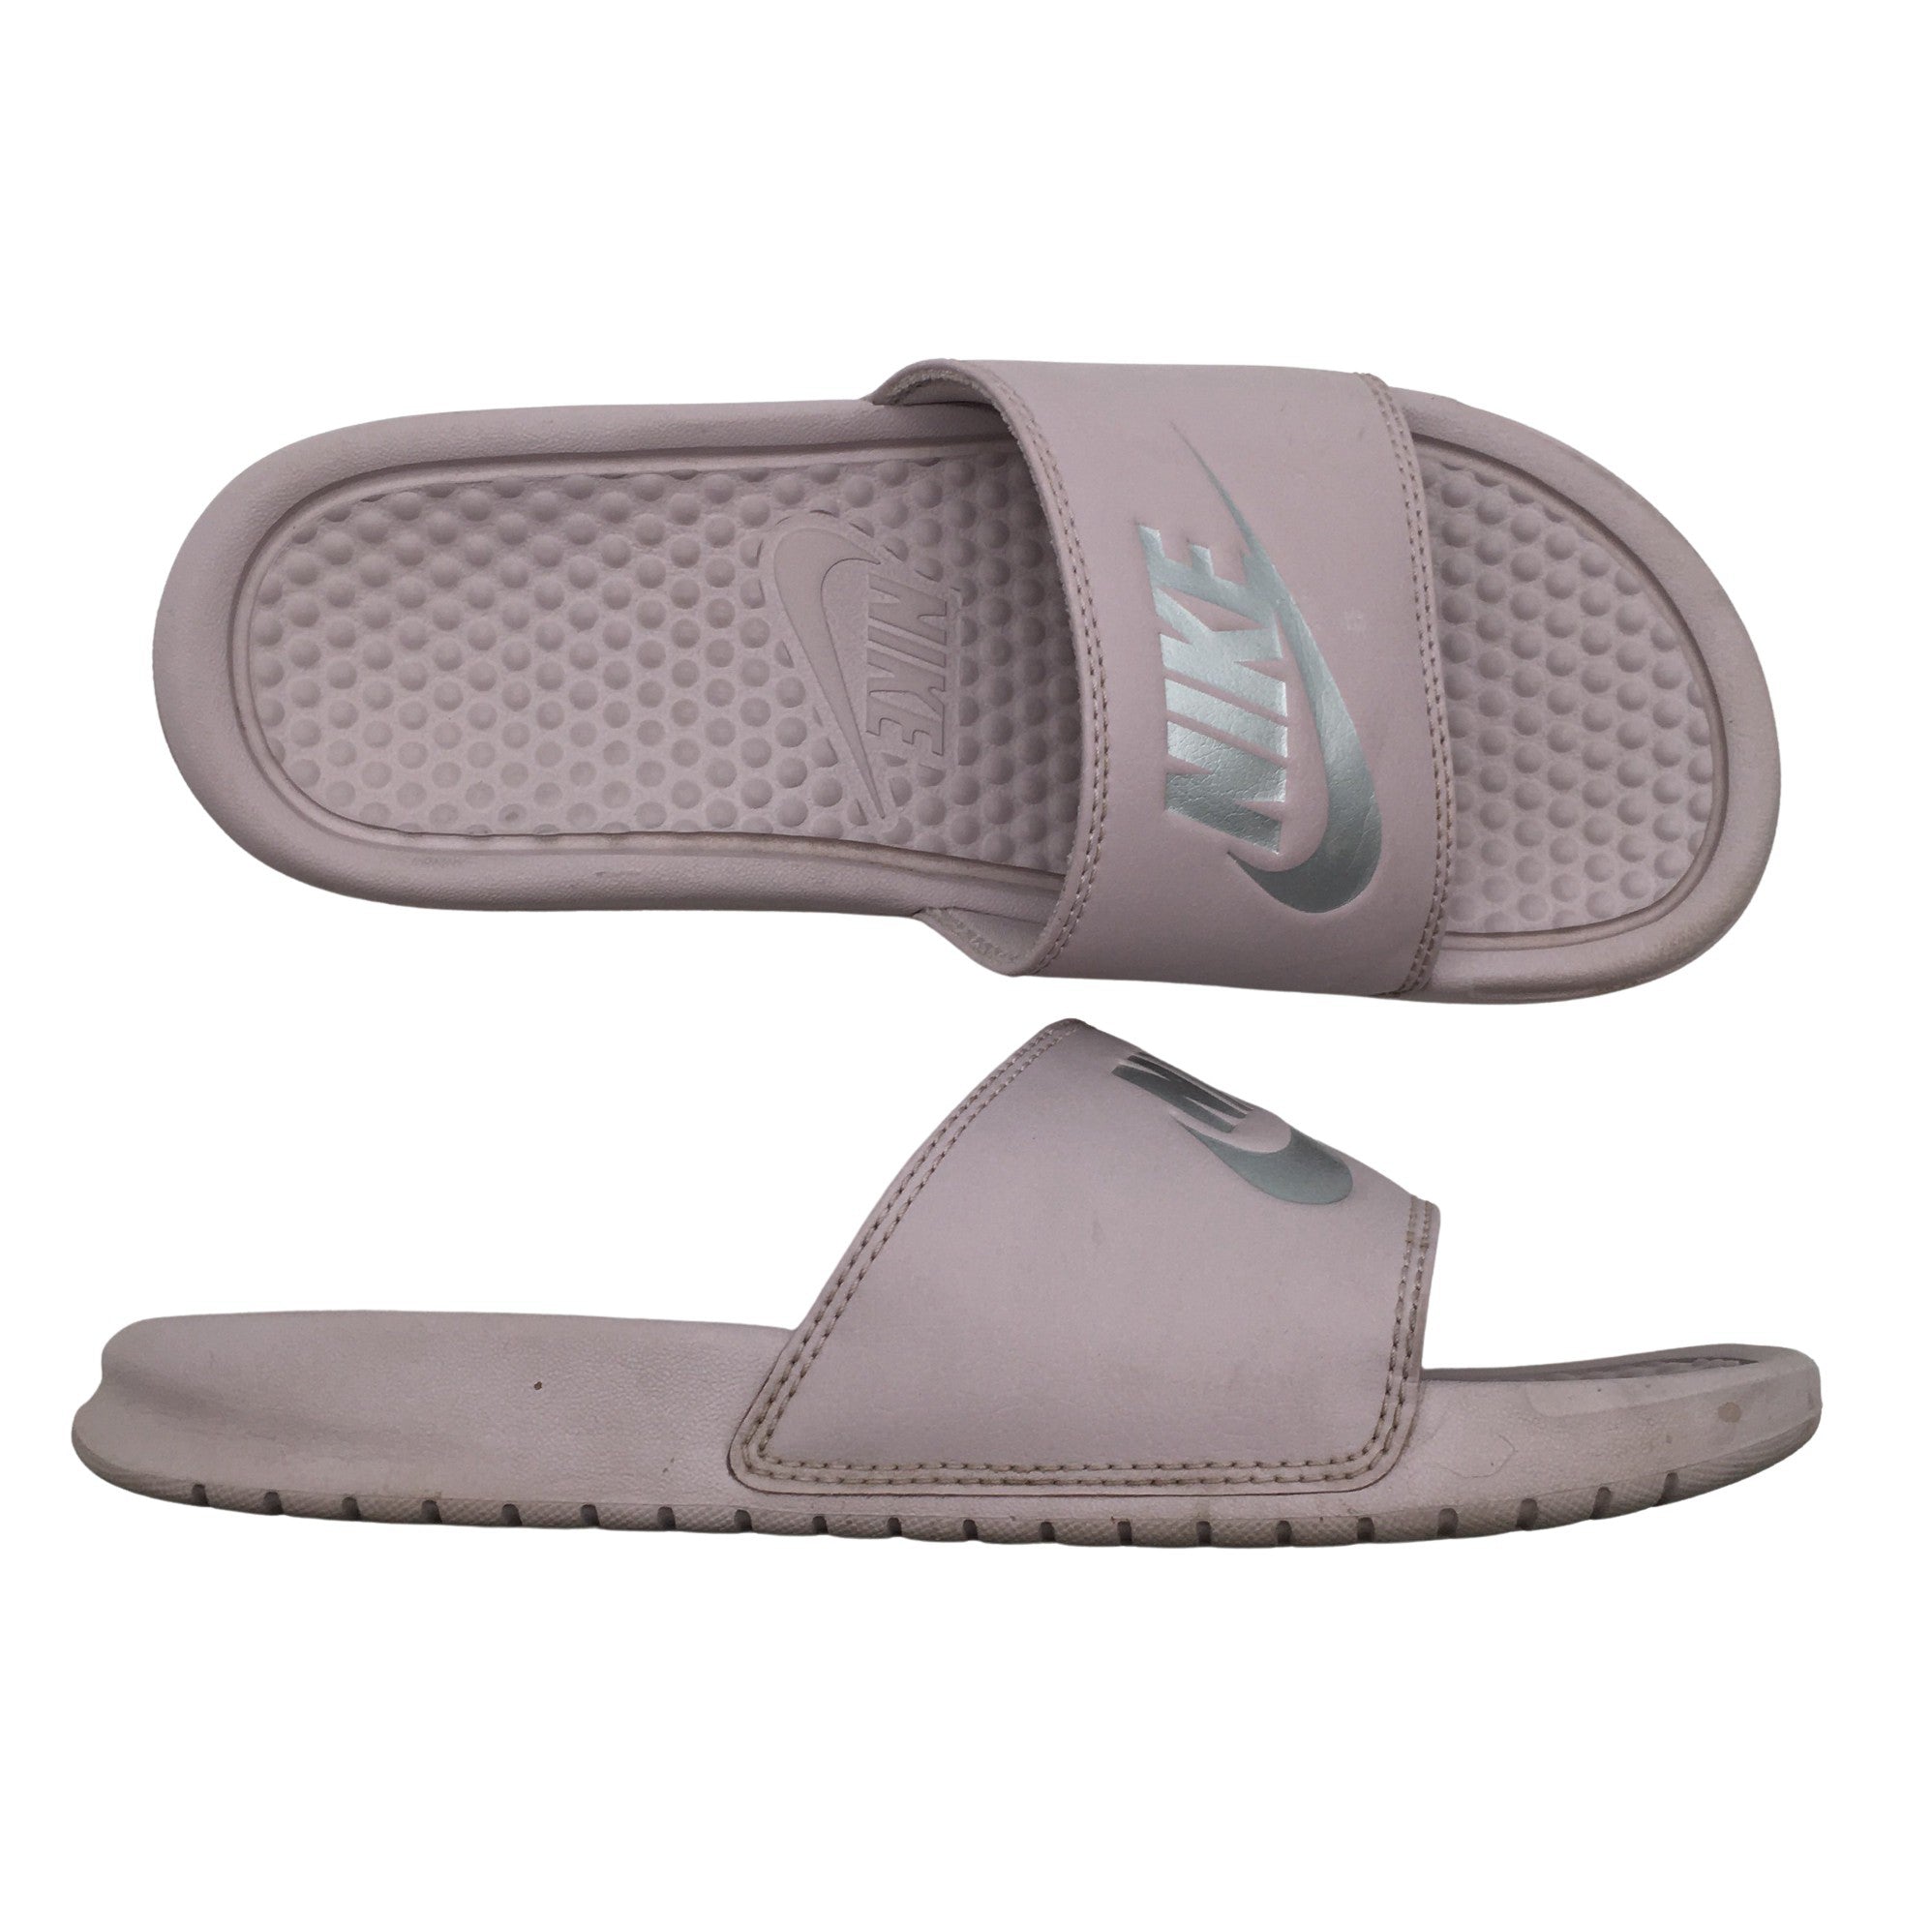 Penge gummi ambulance at klemme Women's Nike Beach sandals, size 38 (Purple) | Emmy